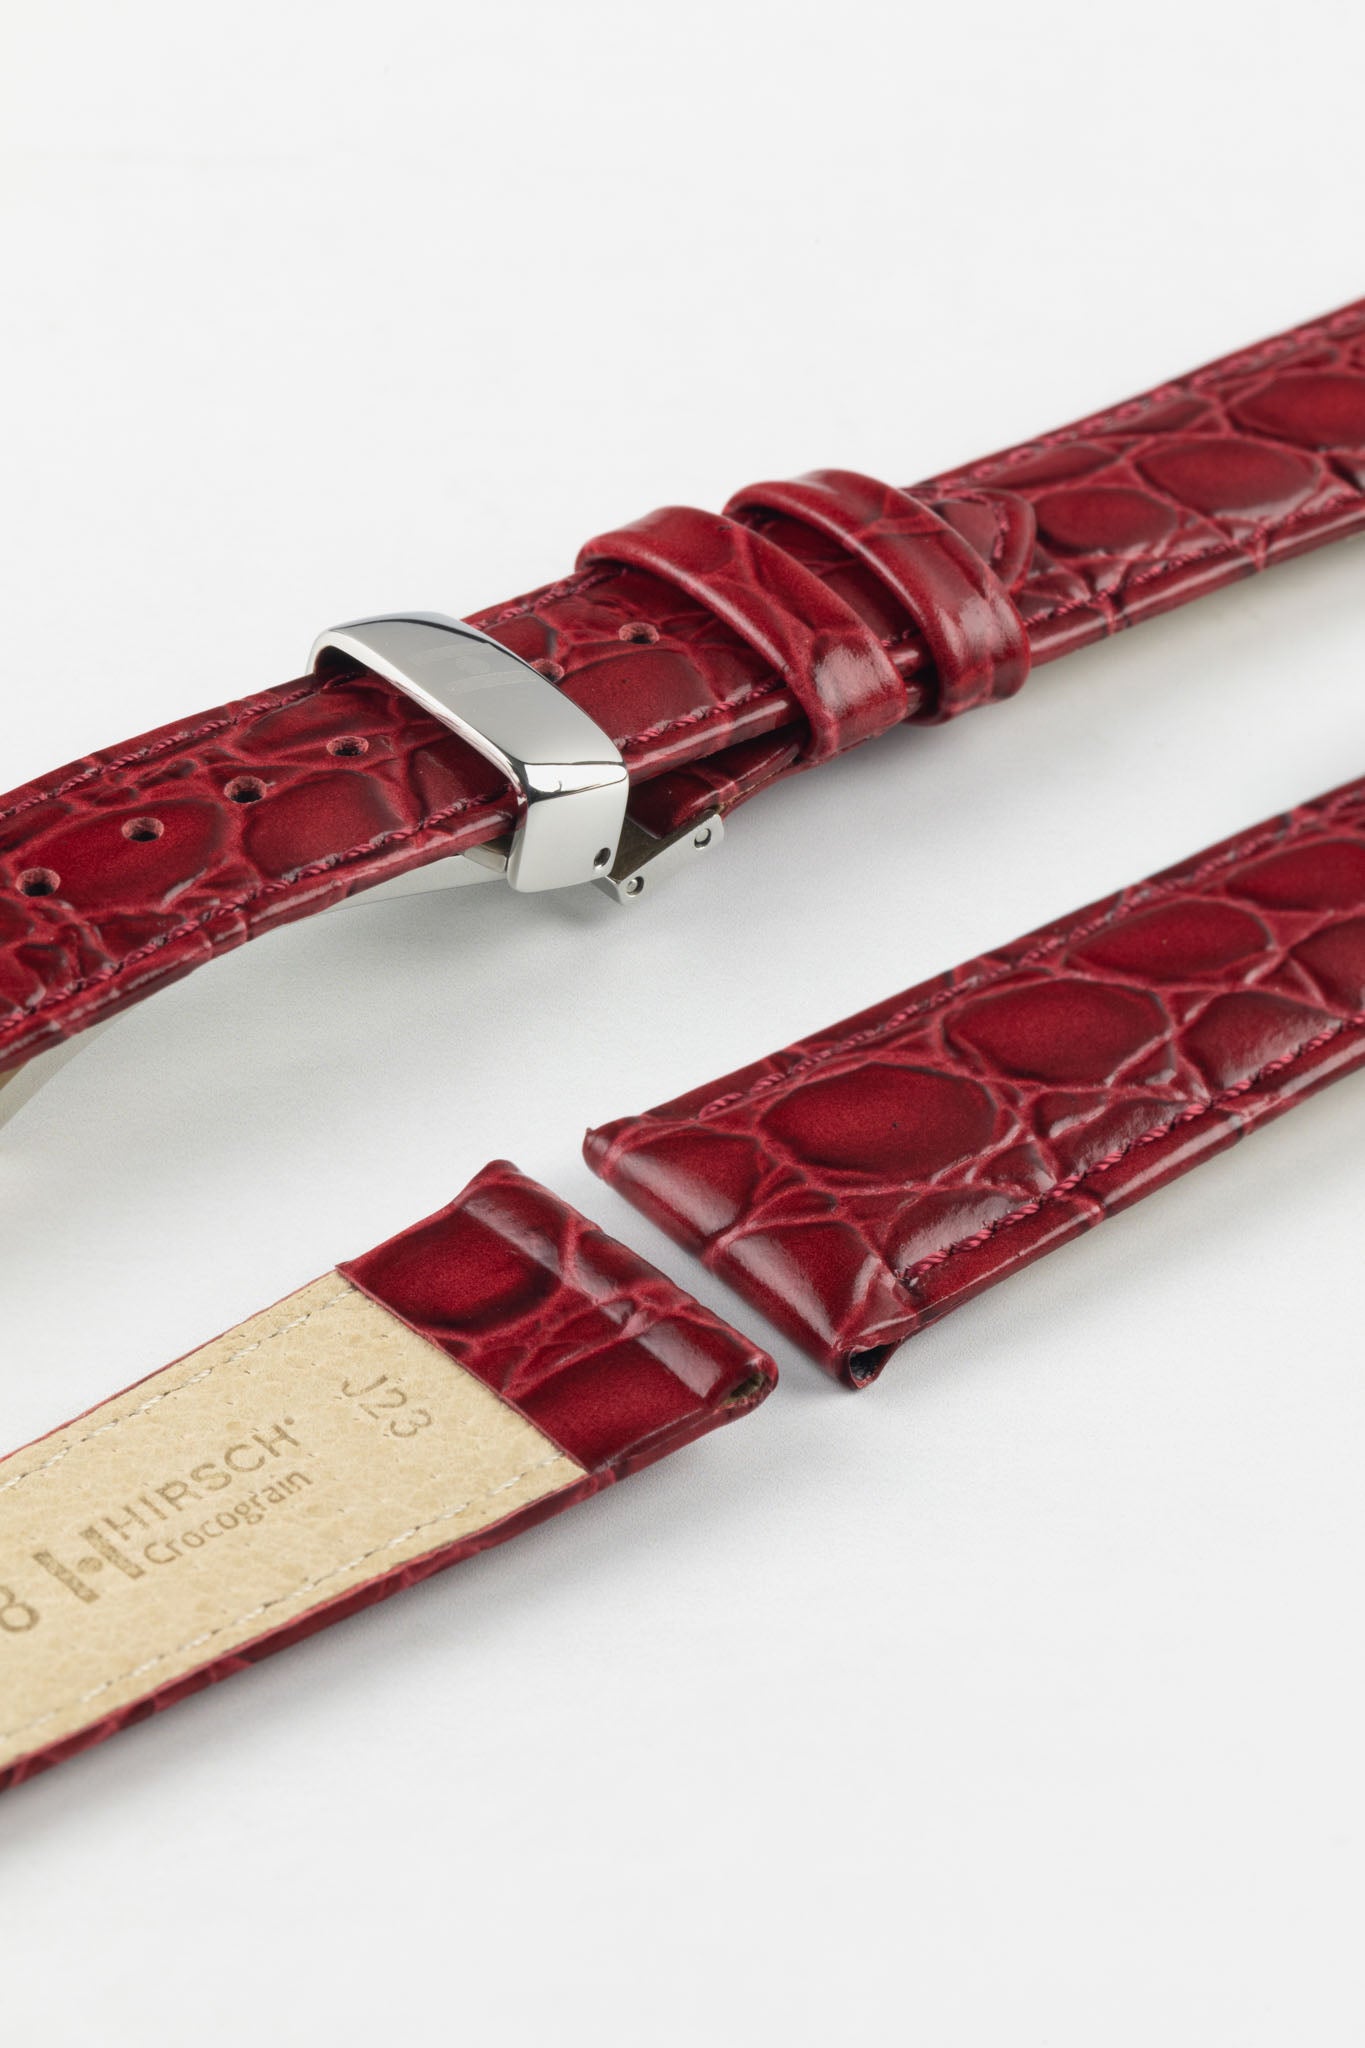 Hirsch CROCOGRAIN NQR Crocodile Embossed Leather Watch Strap in BURGUNDY